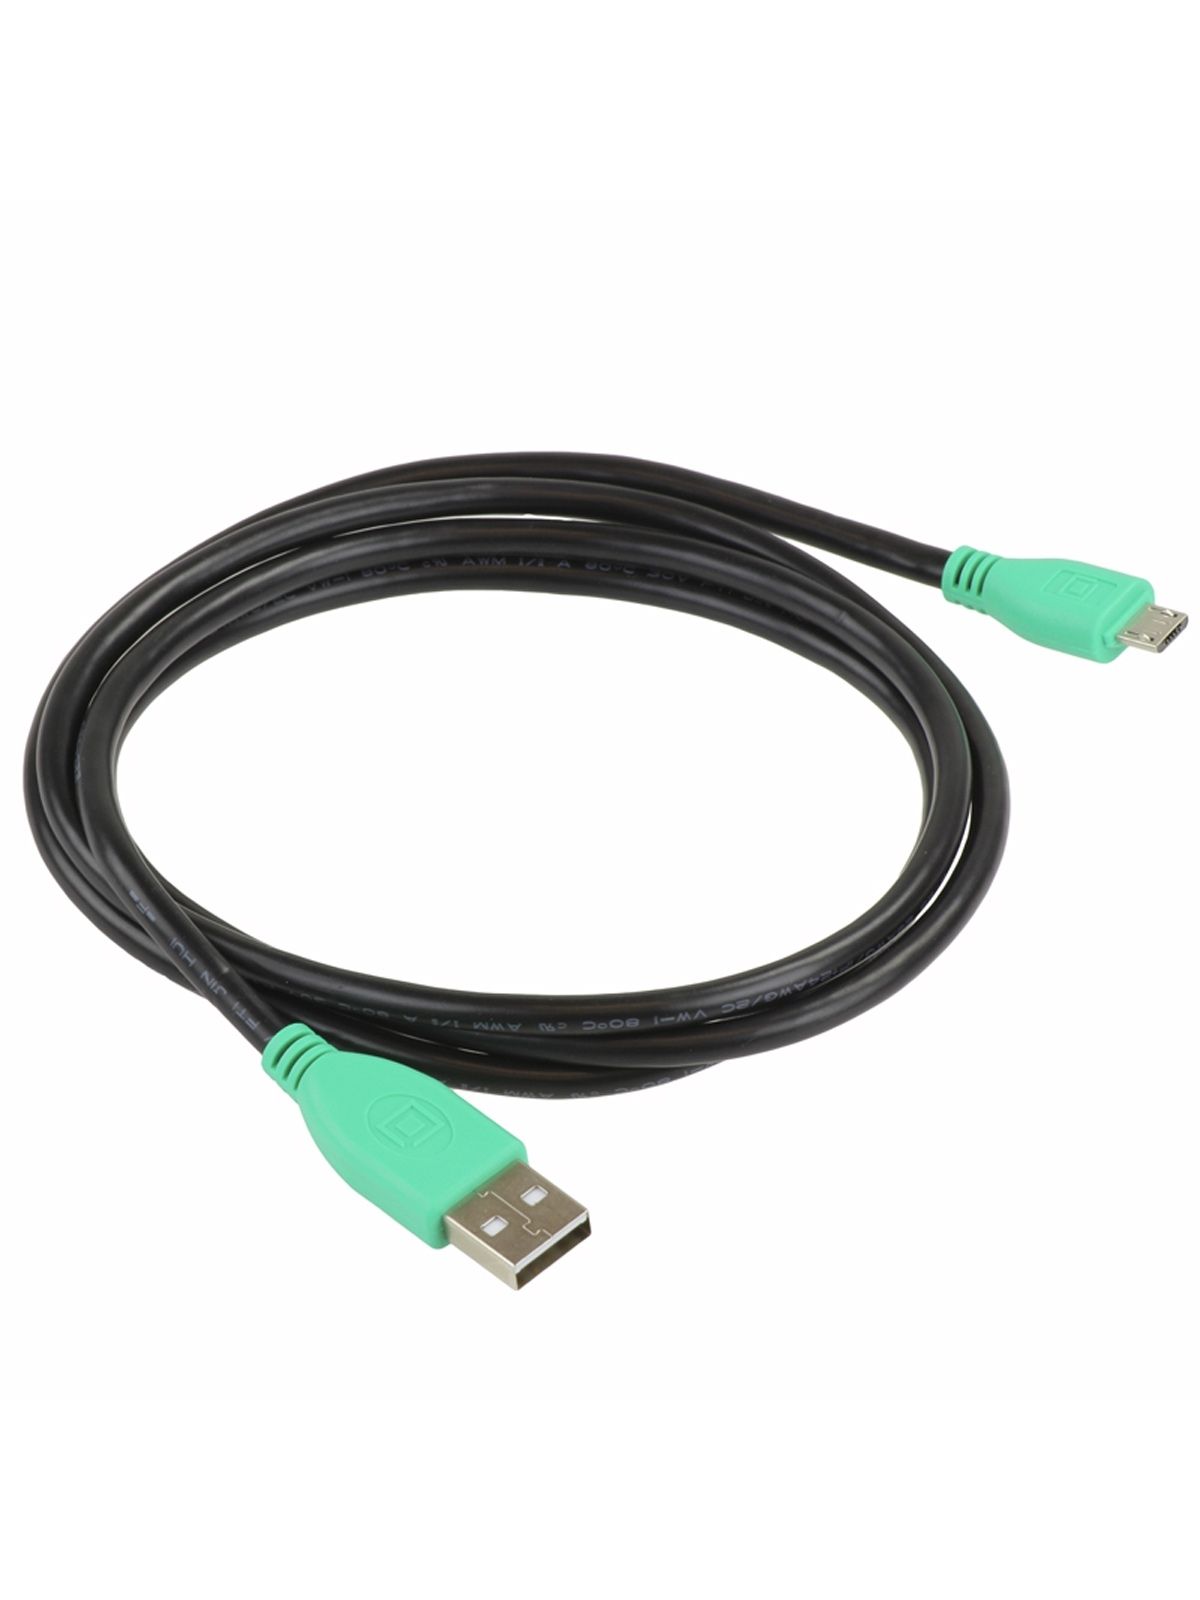 RAM Mounts GDS USB-Kabel - USB-A / microUSB (2.0), ca. 120 cm lang